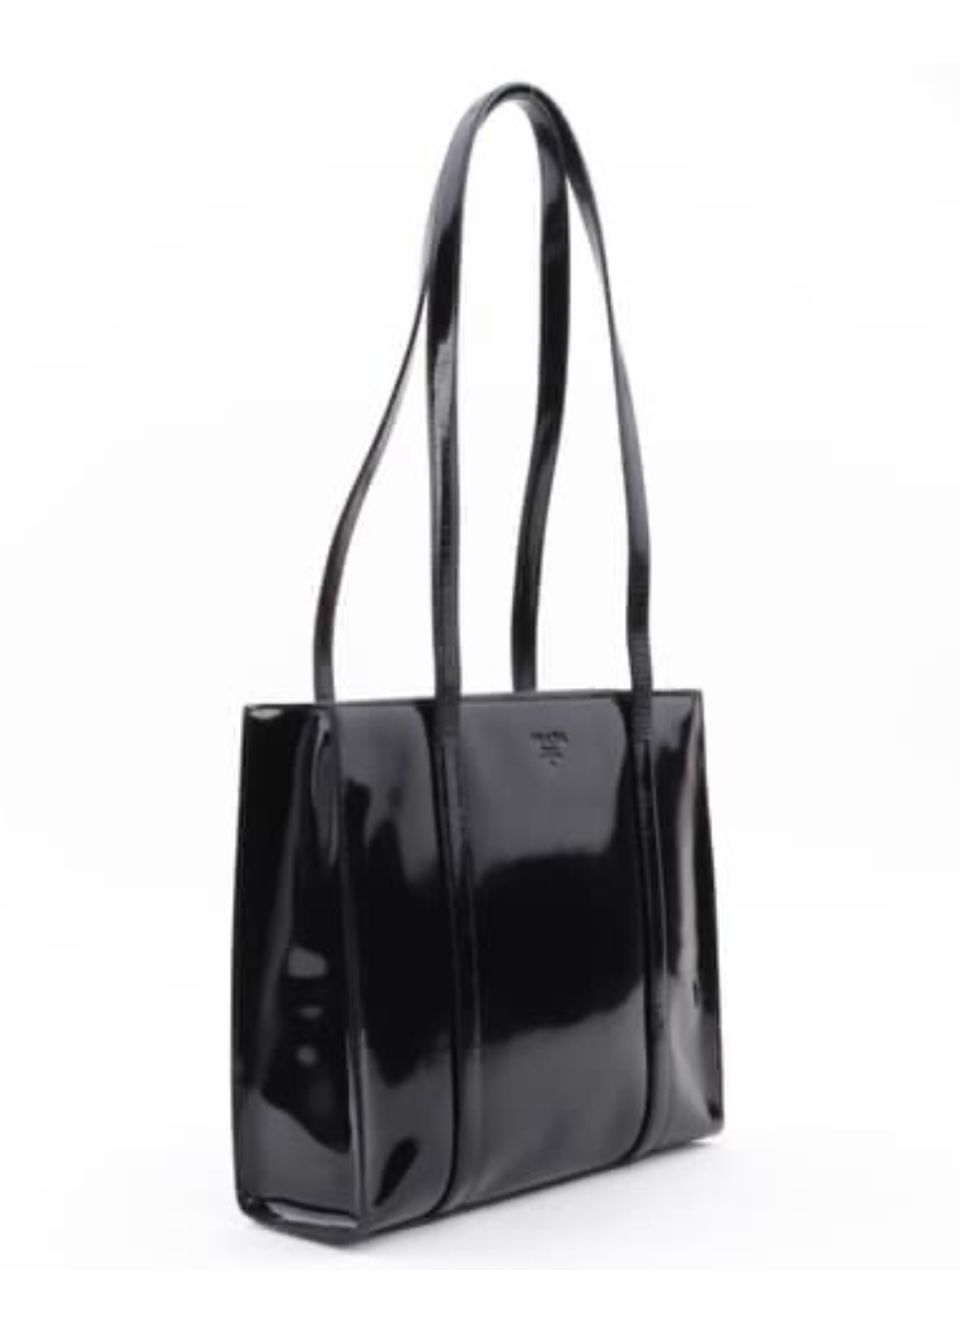 Vintage 1995 Prada Black patent leather Tote bag